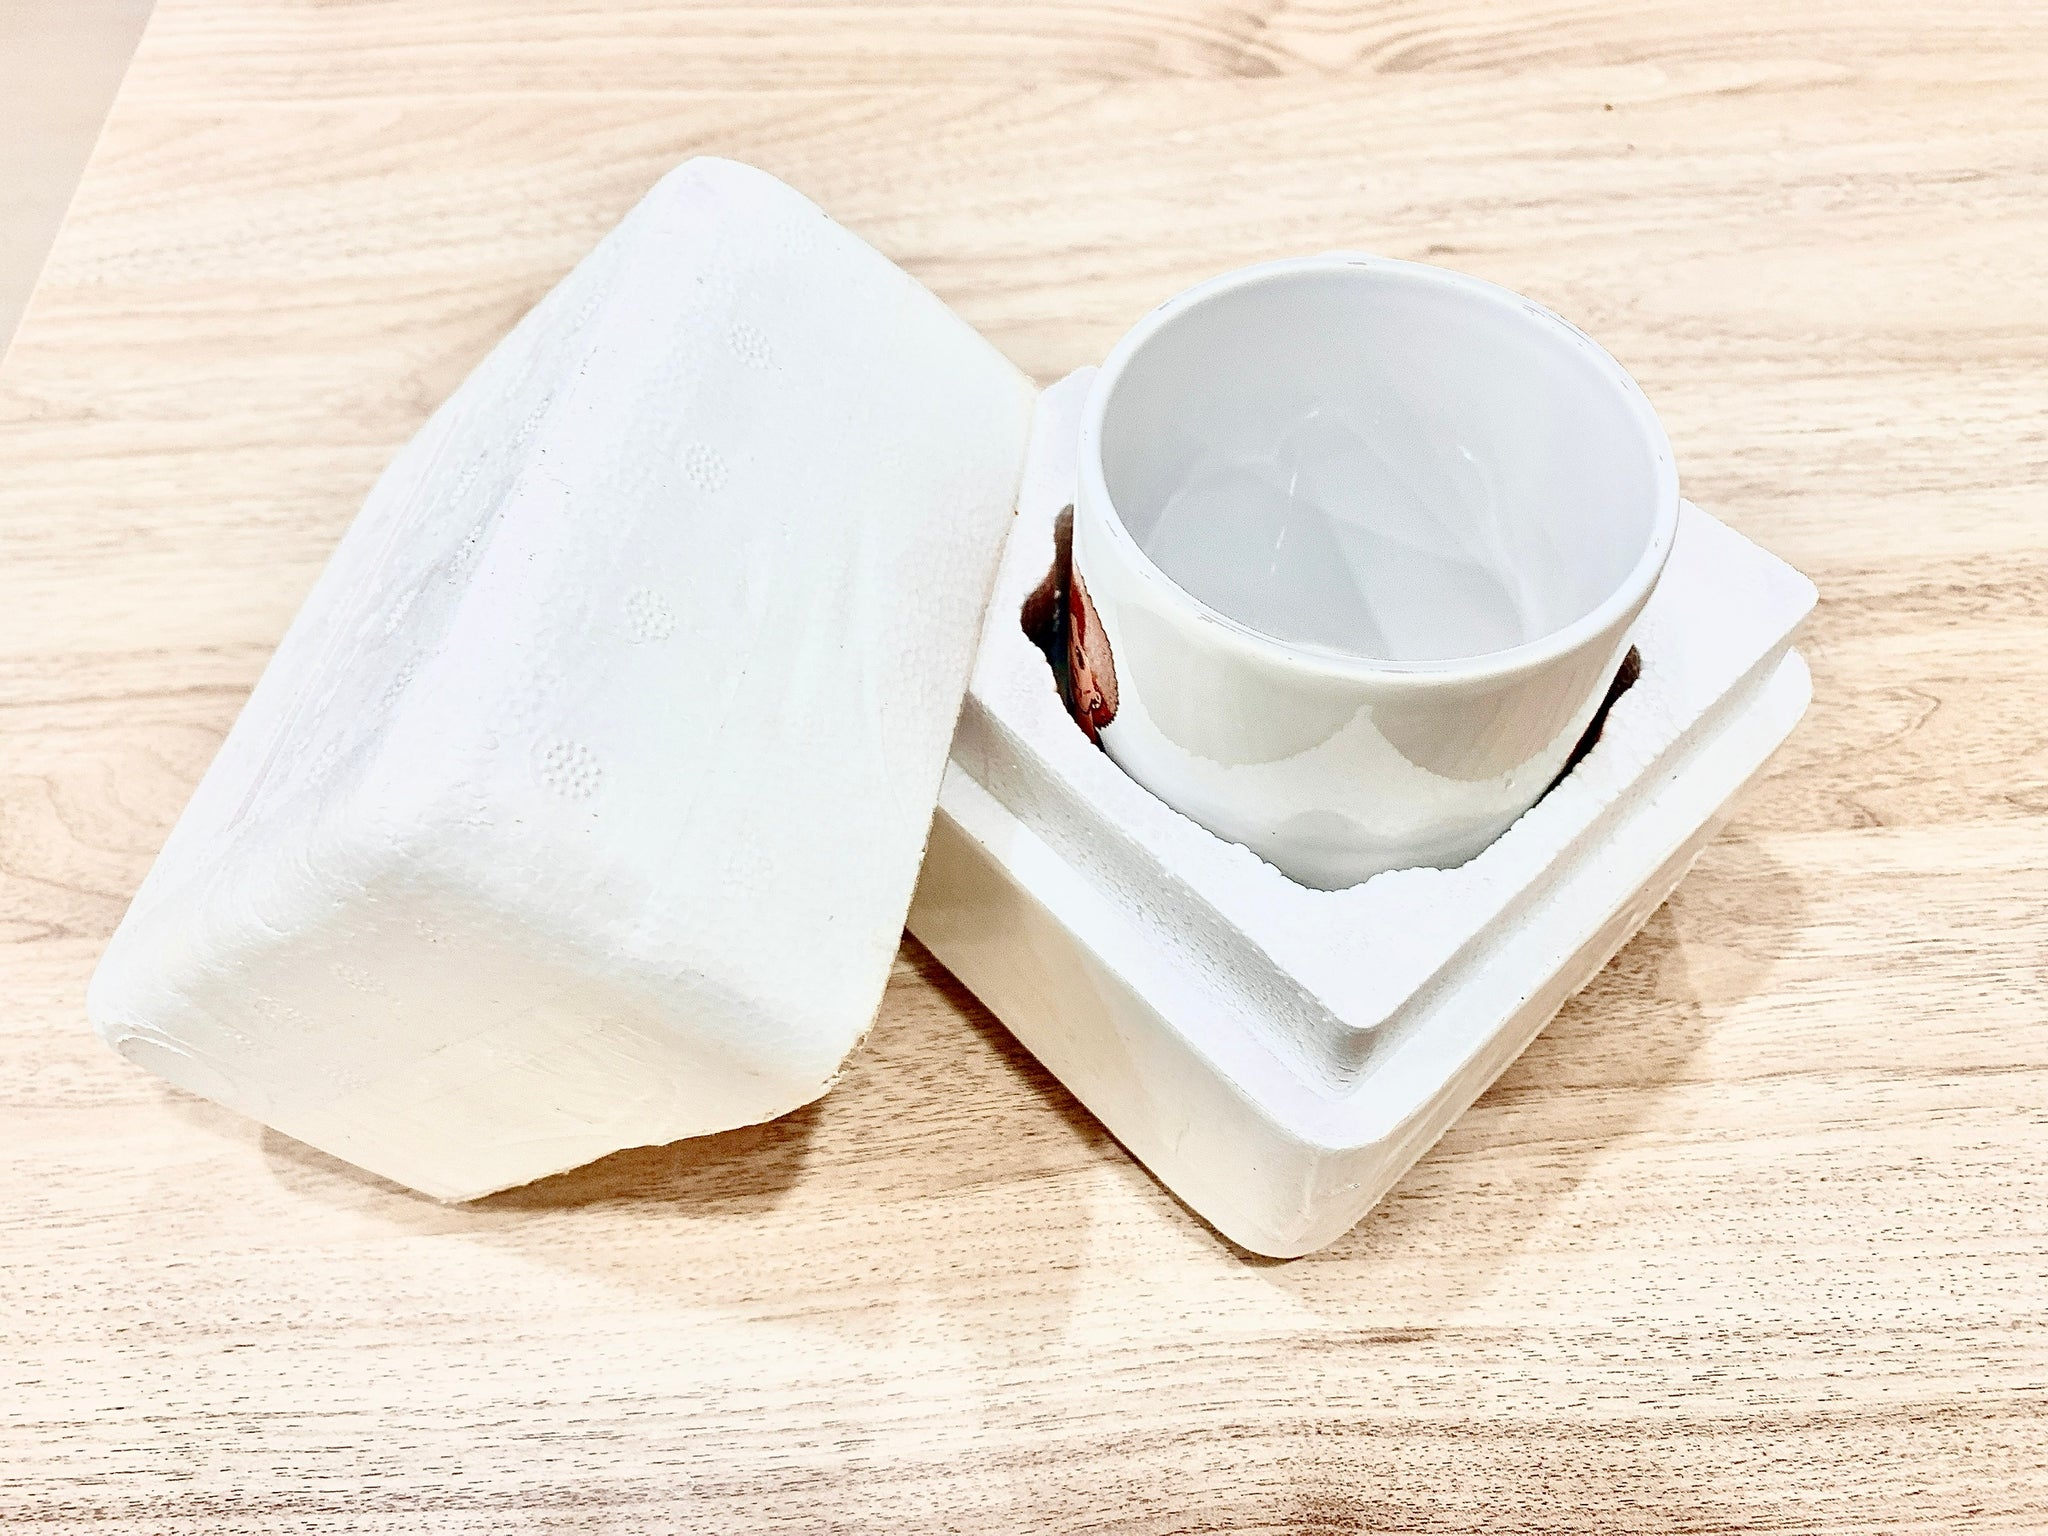 Skitongifts Funny Ceramic Coffee Mug Novelty M42-Nh231221-Vert Der Ferk Wbfq2Vp